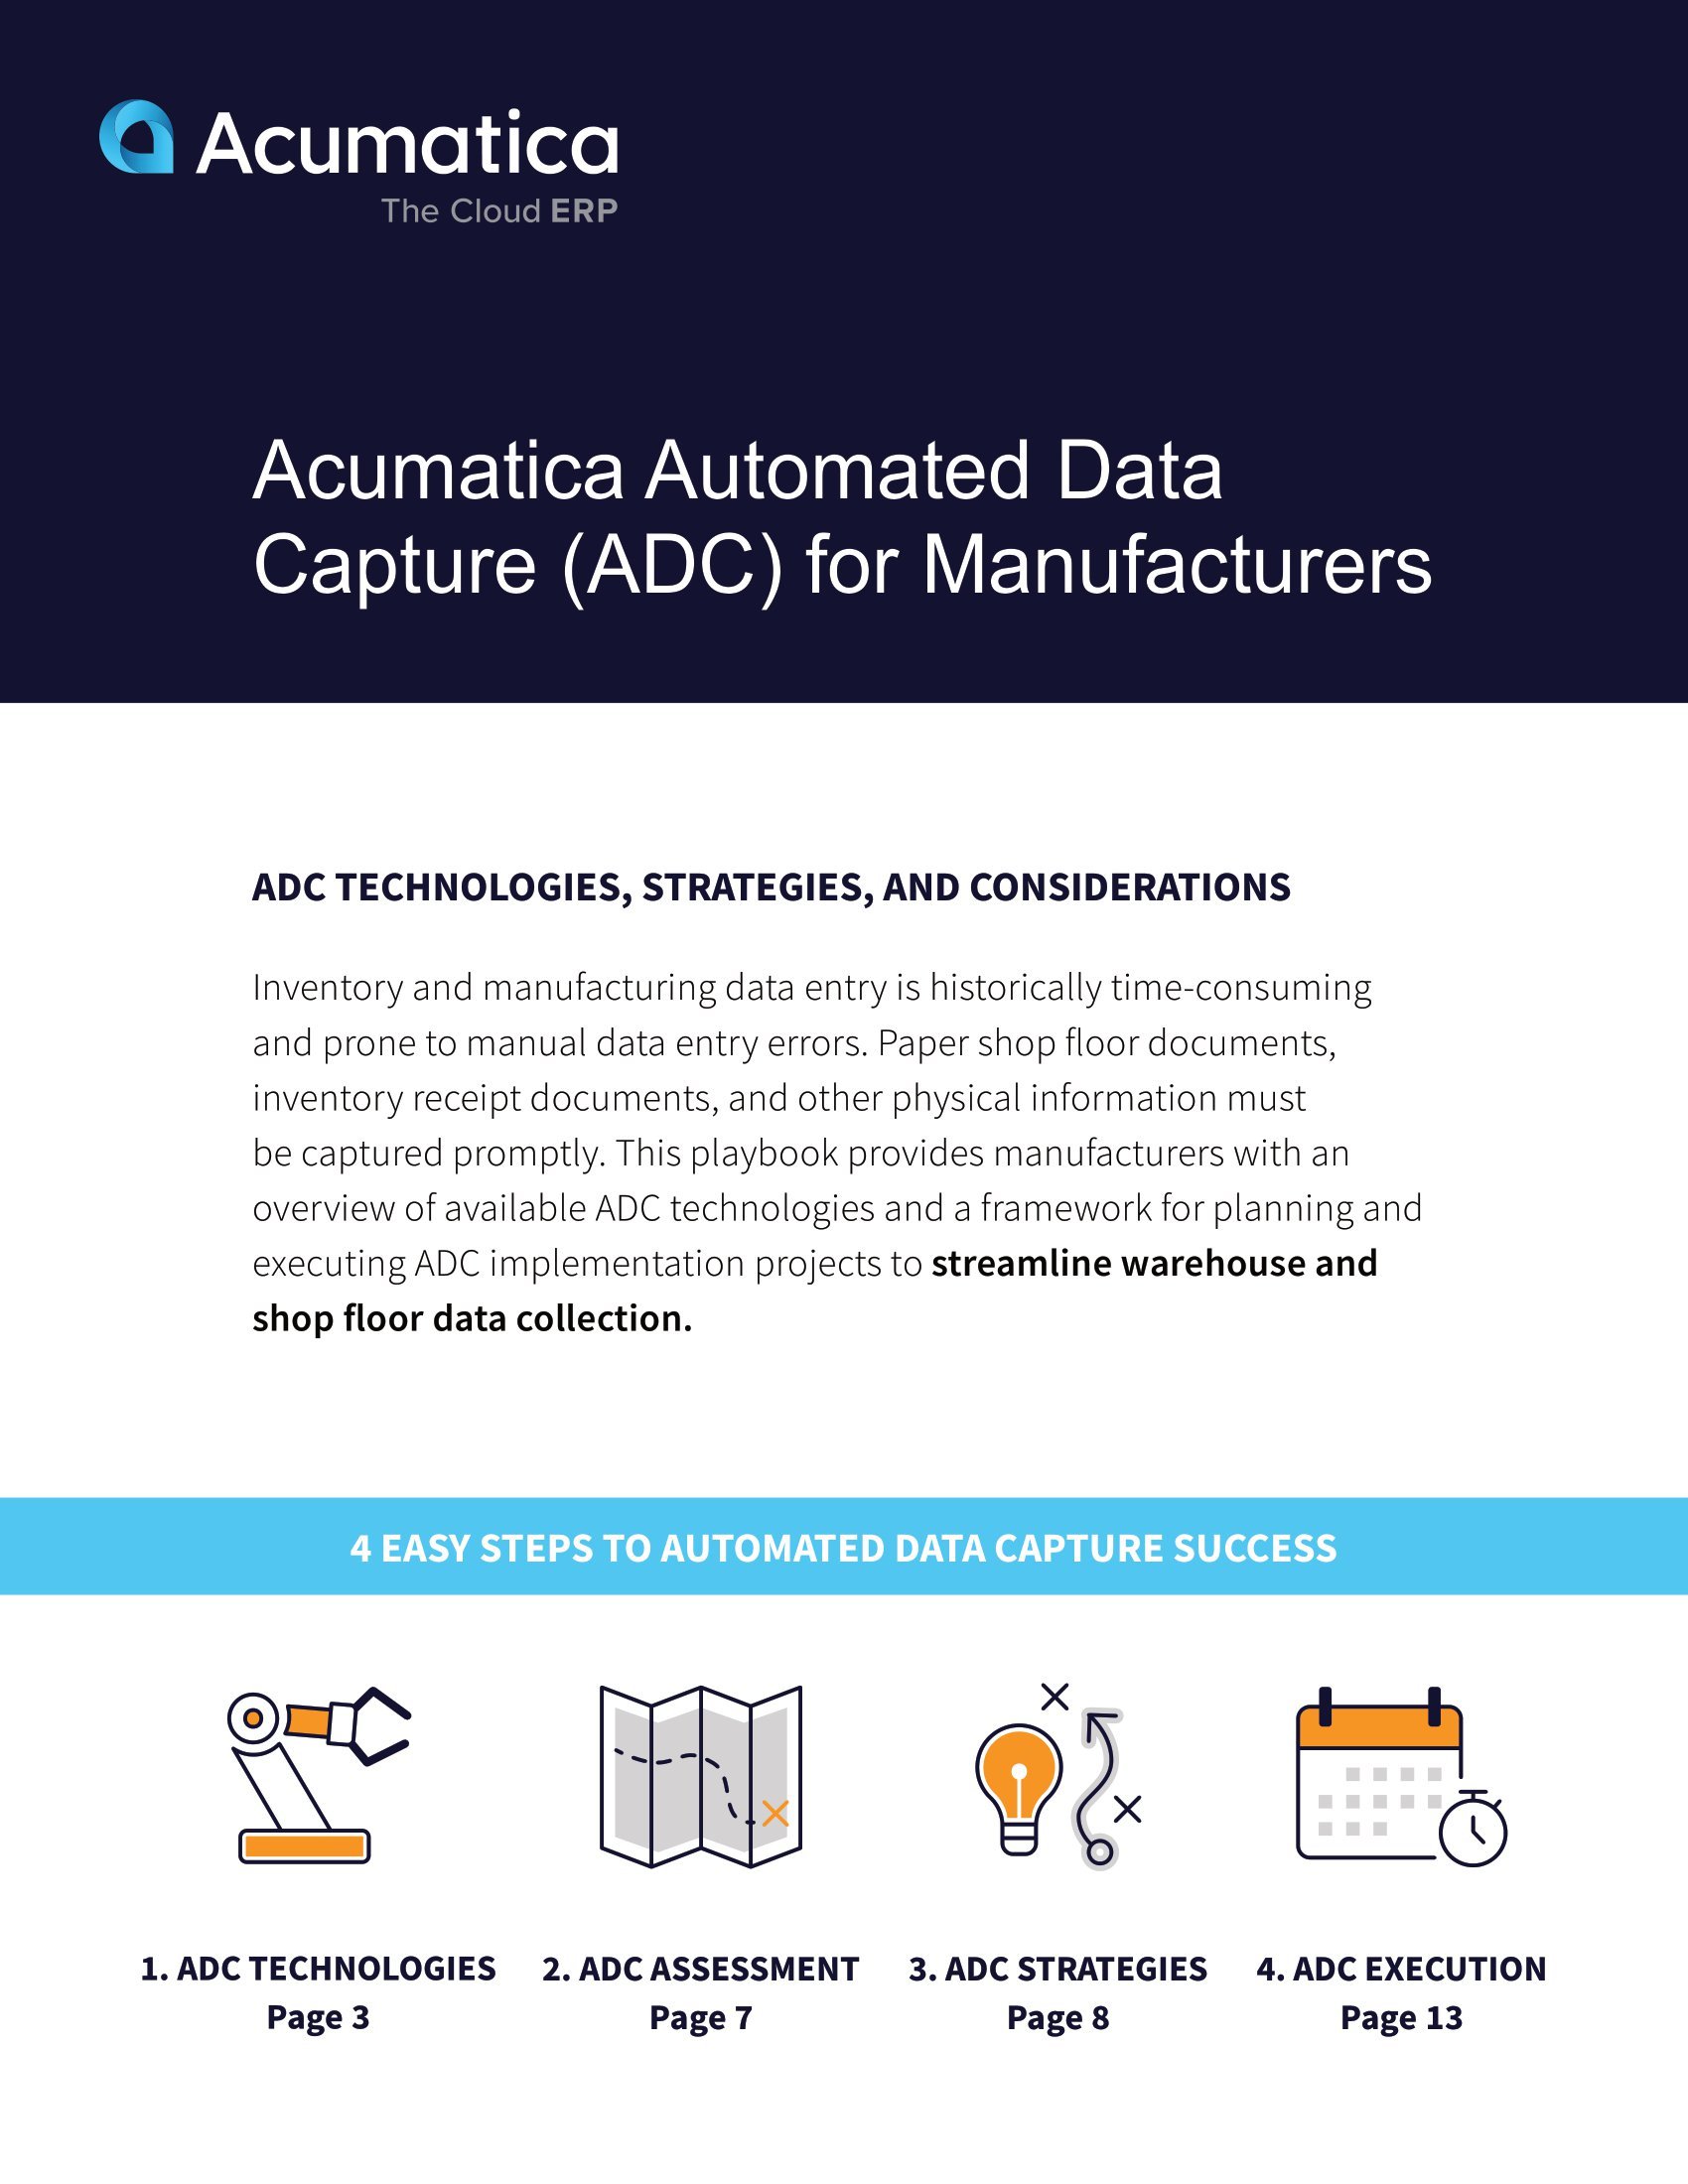 Captura automatizada de datos para fabricantes